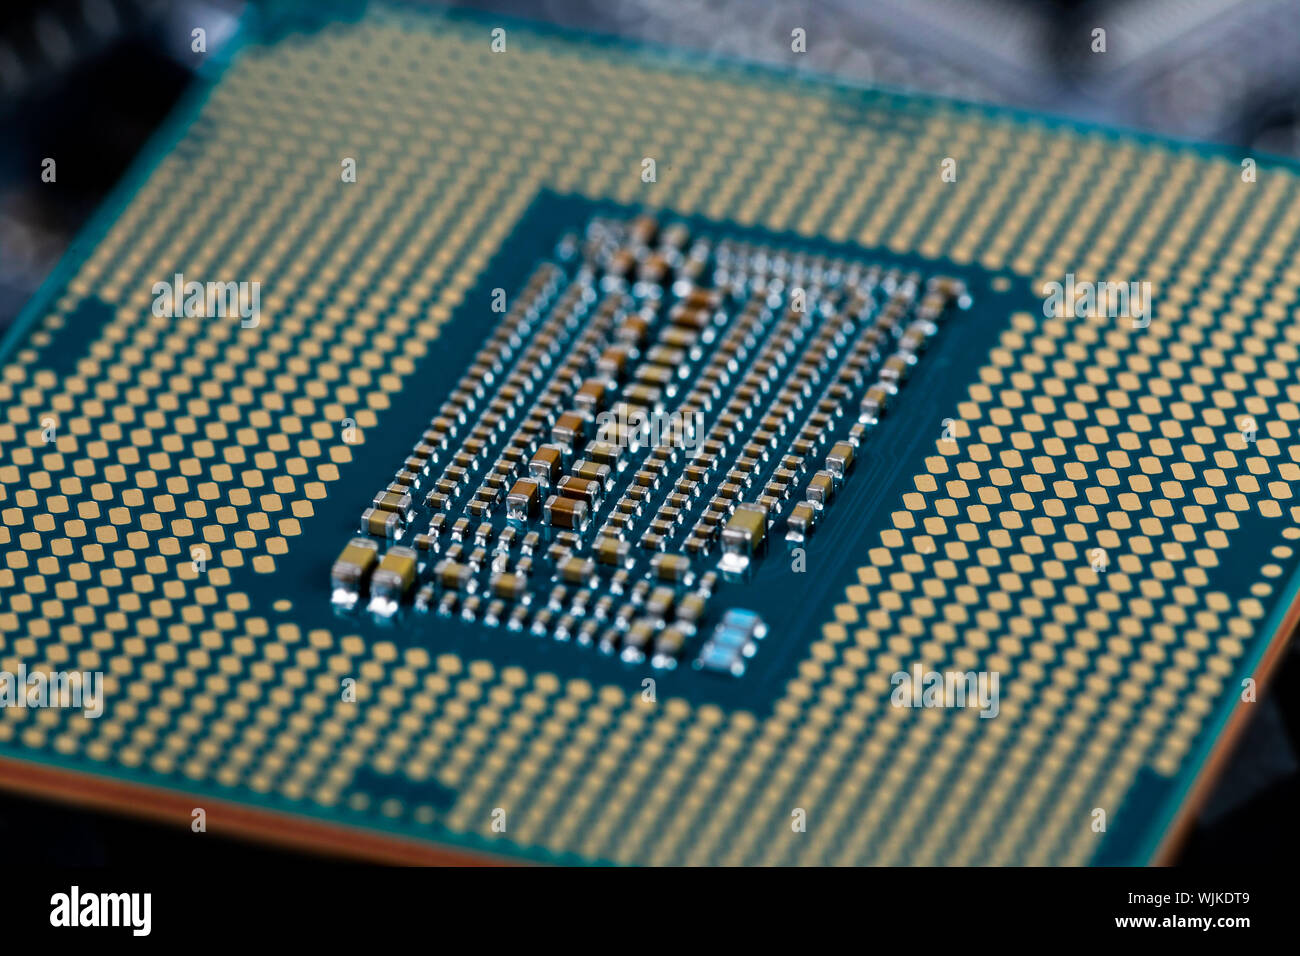 back side of modern lga 1151v2 central processor unit - closeup Stock Photo  - Alamy